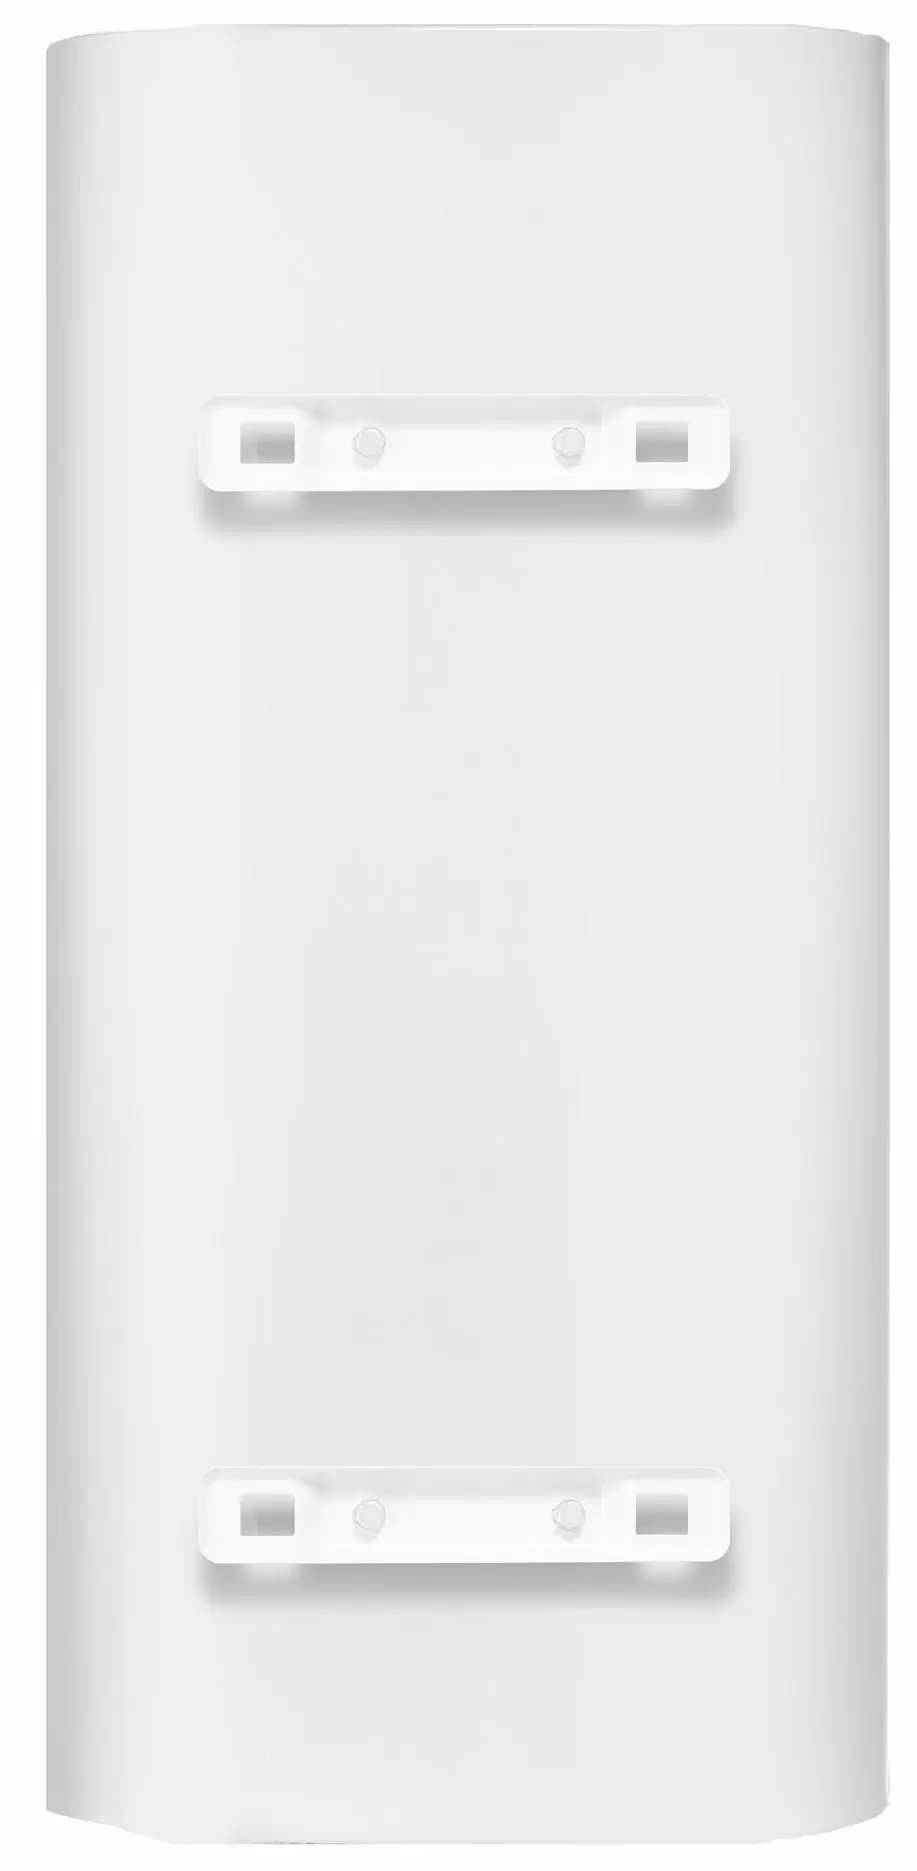 Бойлер накопительный Electrolux EWH 50 Smartinverter Pro 2.0, белый